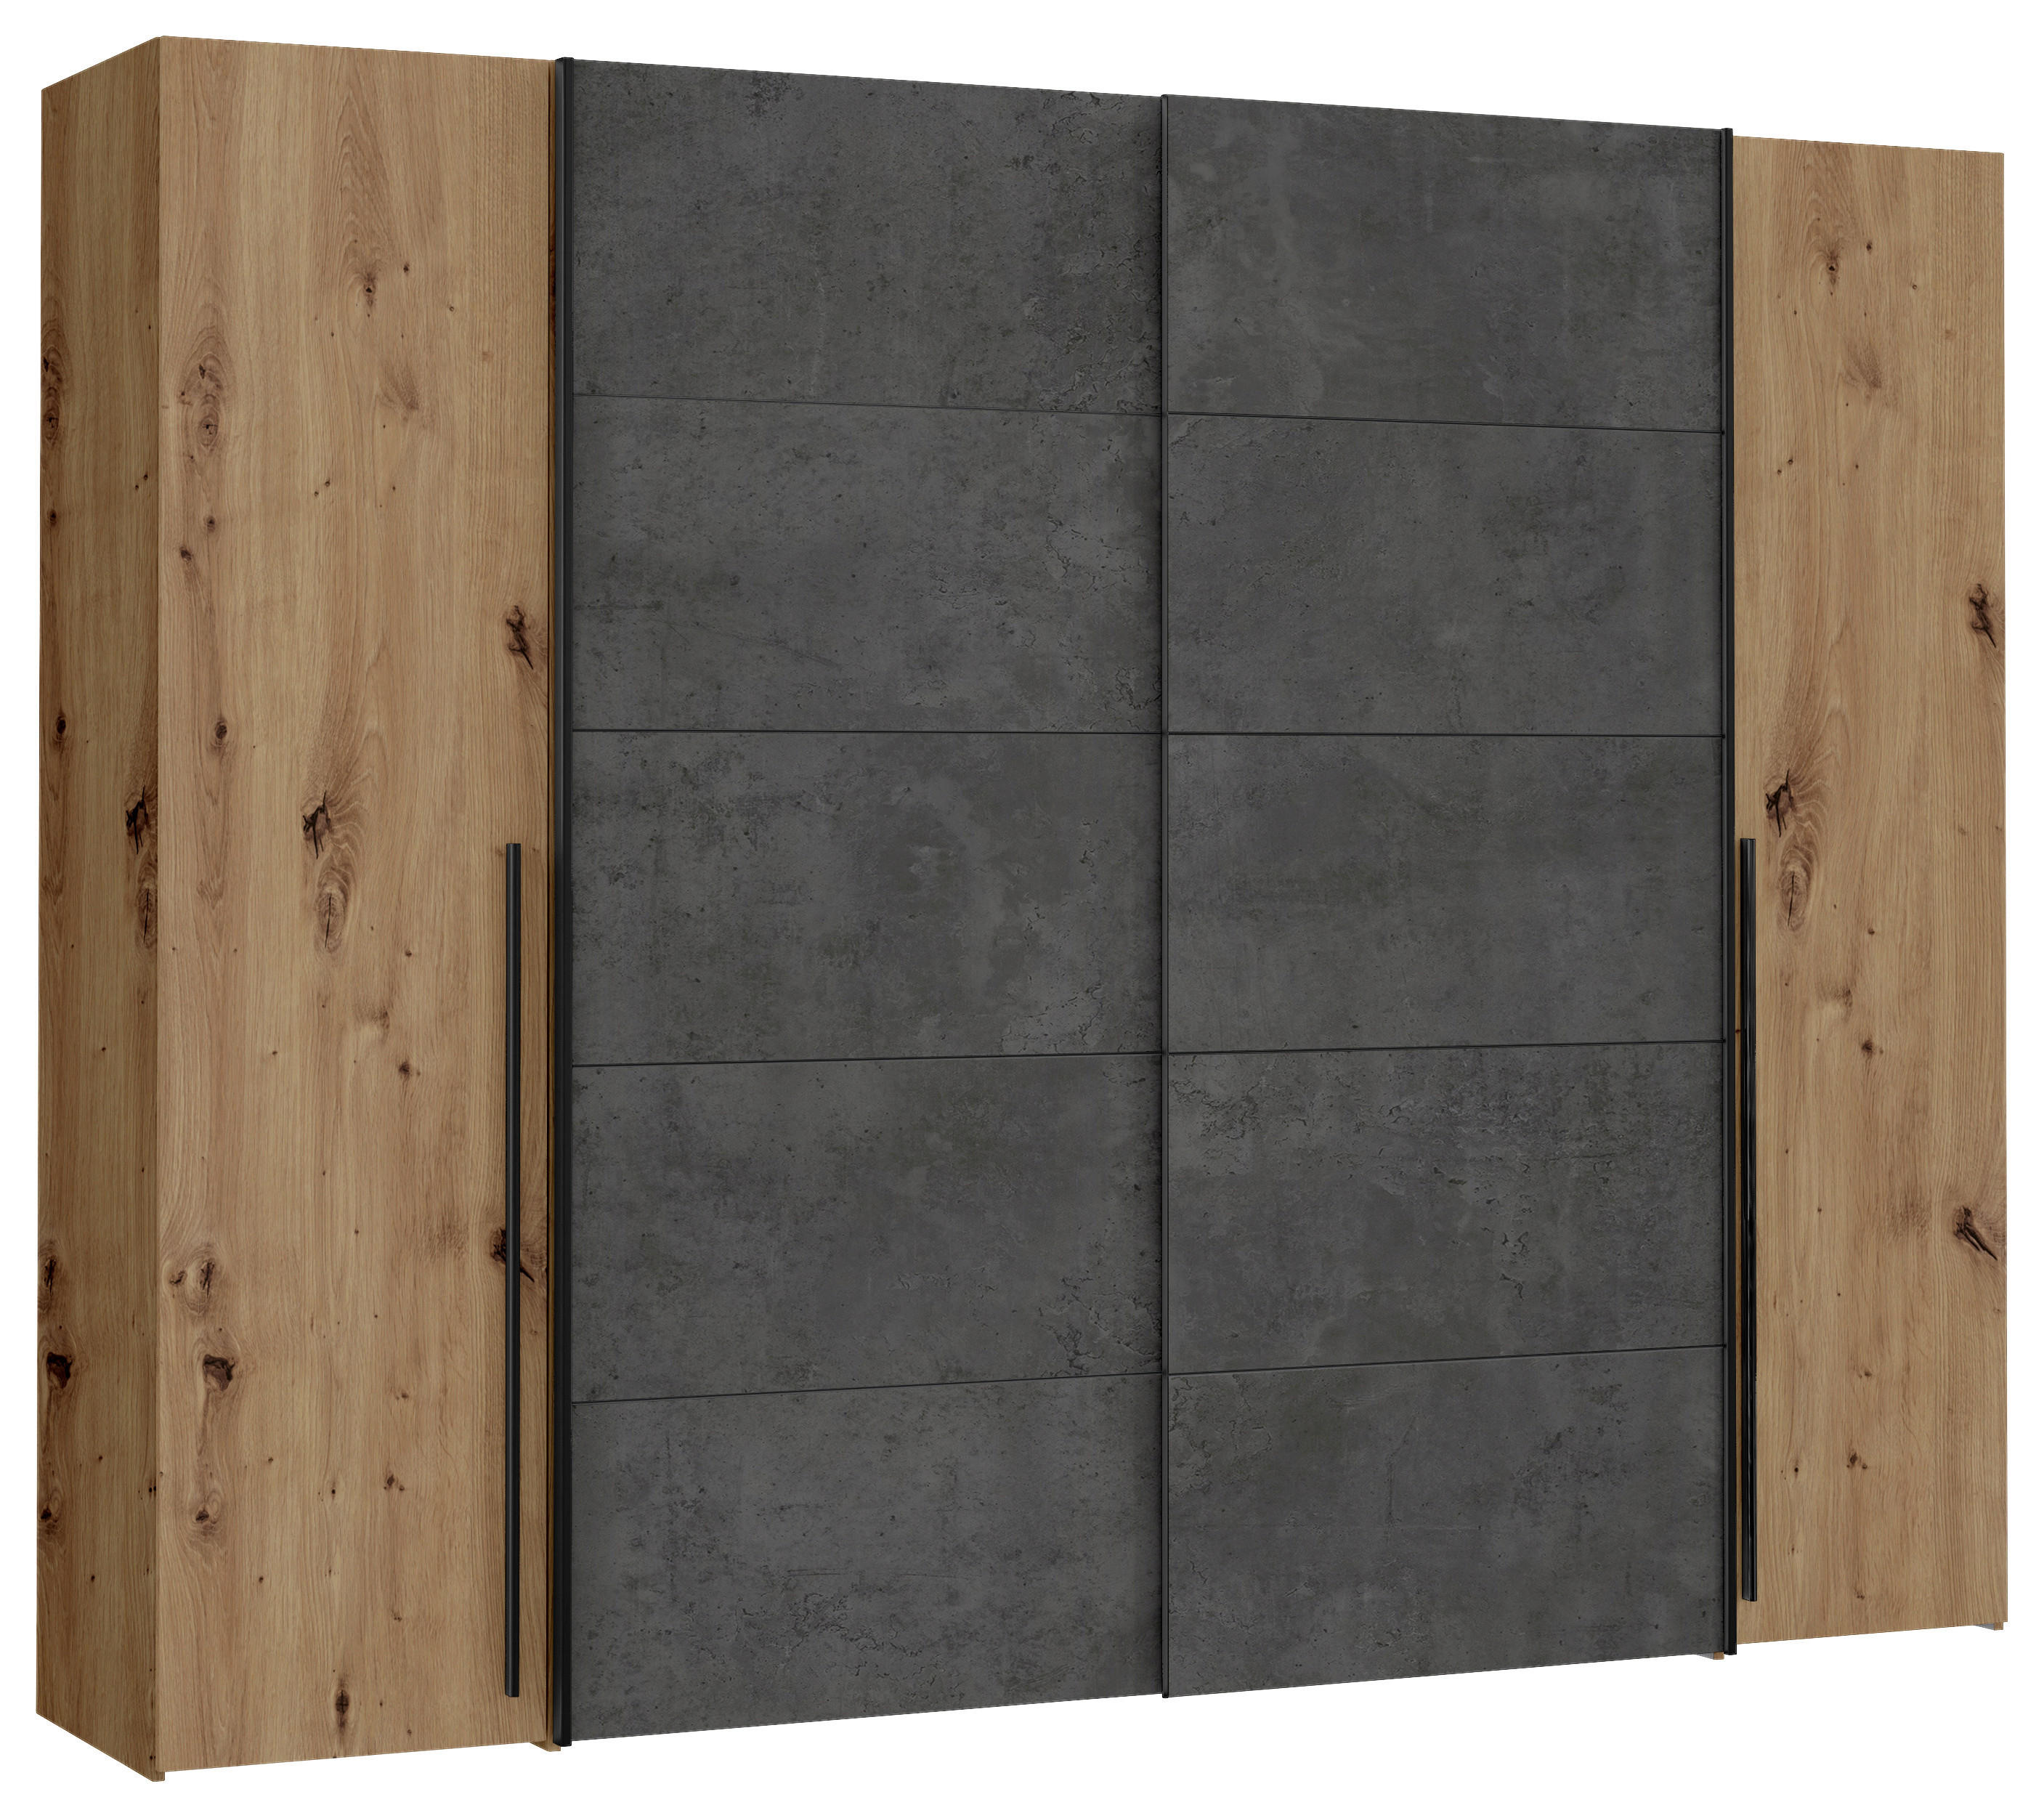 GARDEROB ekfärgad, mörkgrå  - mörkgrå/svart, Modern, metall/träbaserade material (270/210/61cm) - MID.YOU